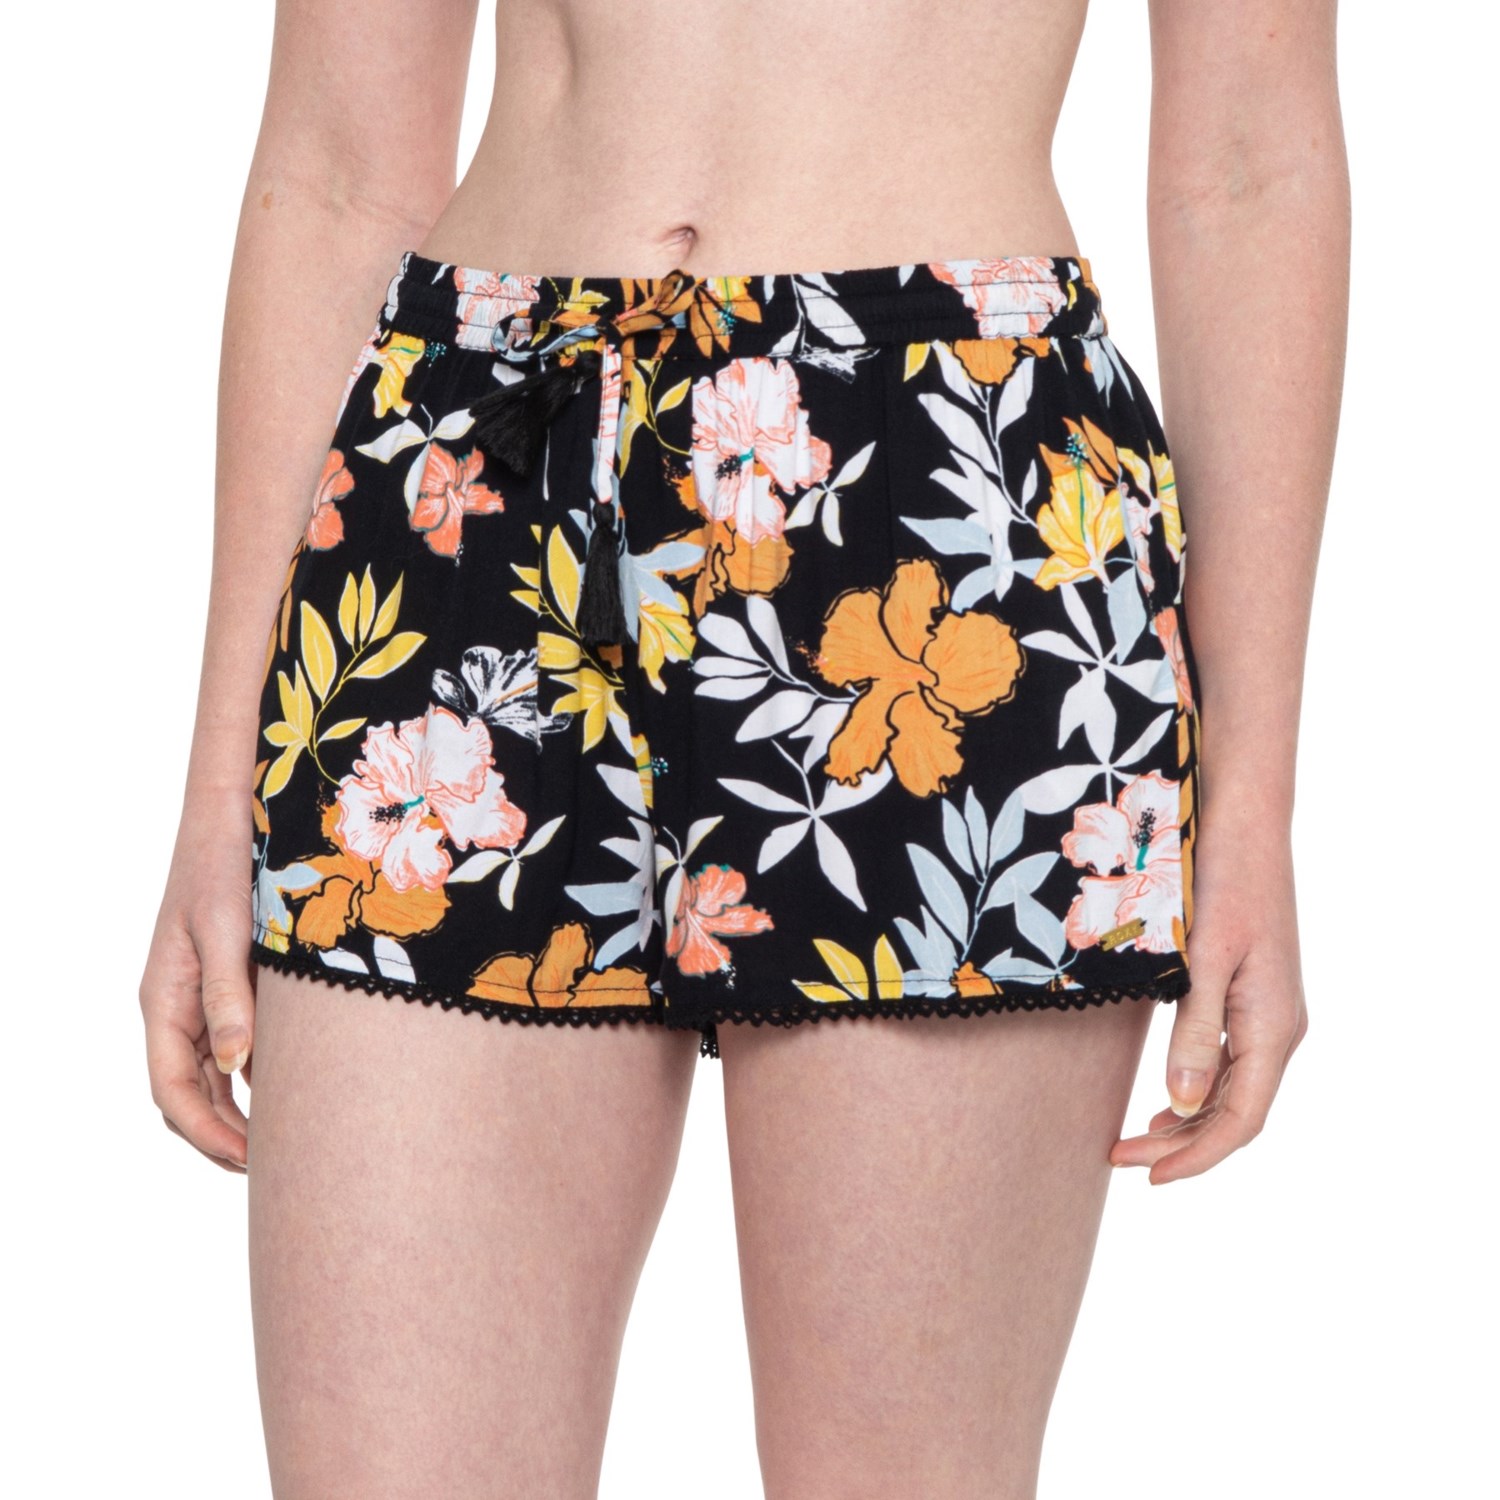 Roxy Salty Tan Shorts (For Women)